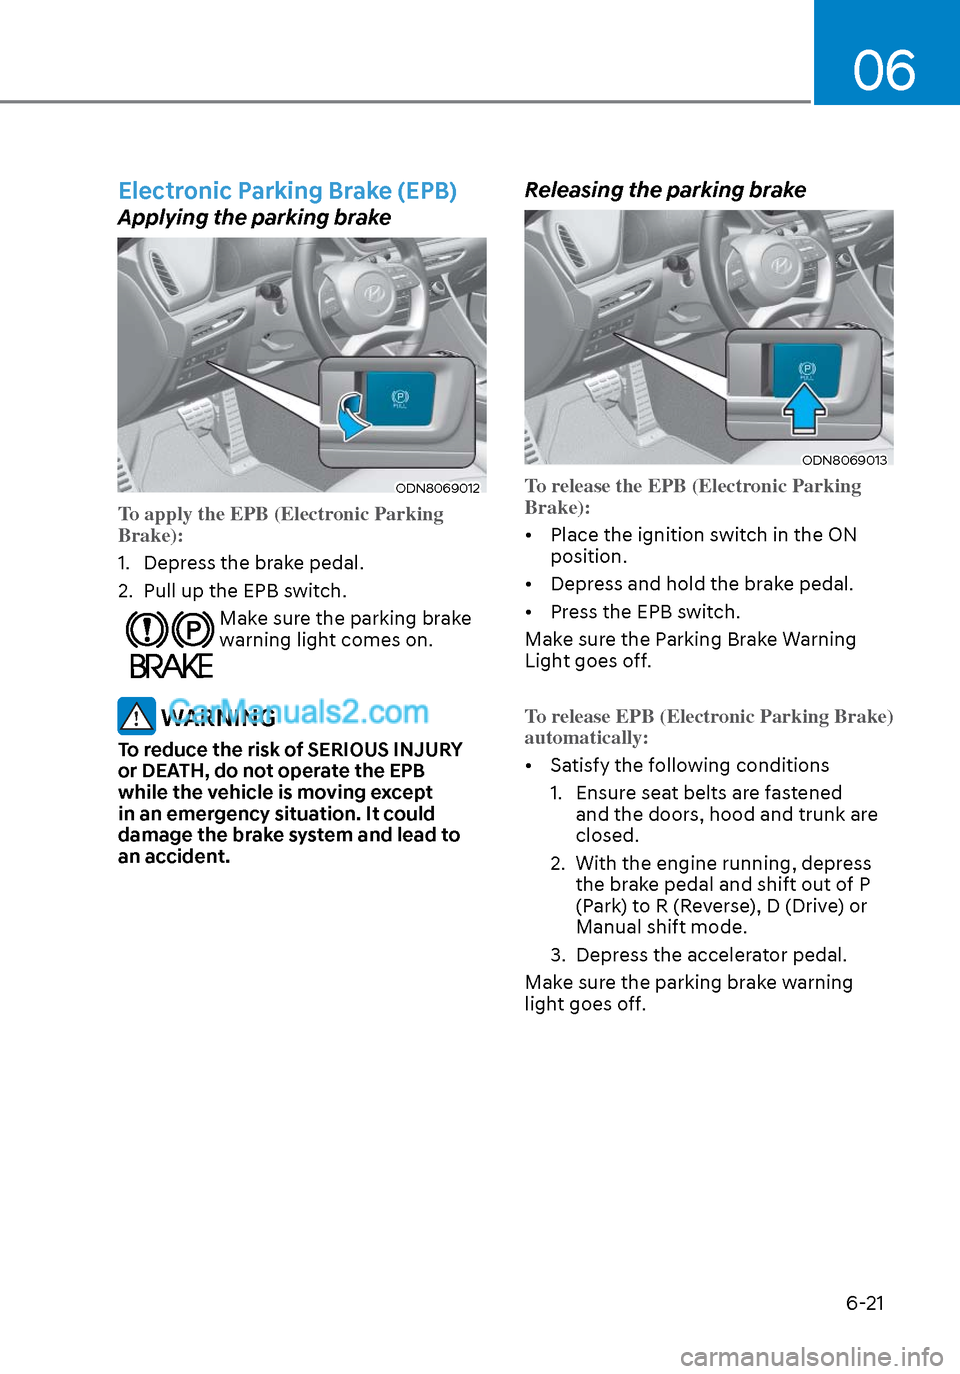 Hyundai Sonata 2020  Owners Manual 06
6-21
Electronic Parking Brake (EPB)
Applying the parking brake
ODN8069012ODN8069012
To apply the EPB (Electronic Parking 
Brake):
1.  Depress the brake pedal.
2. 
Pull up the EPB switch. 
Make sure